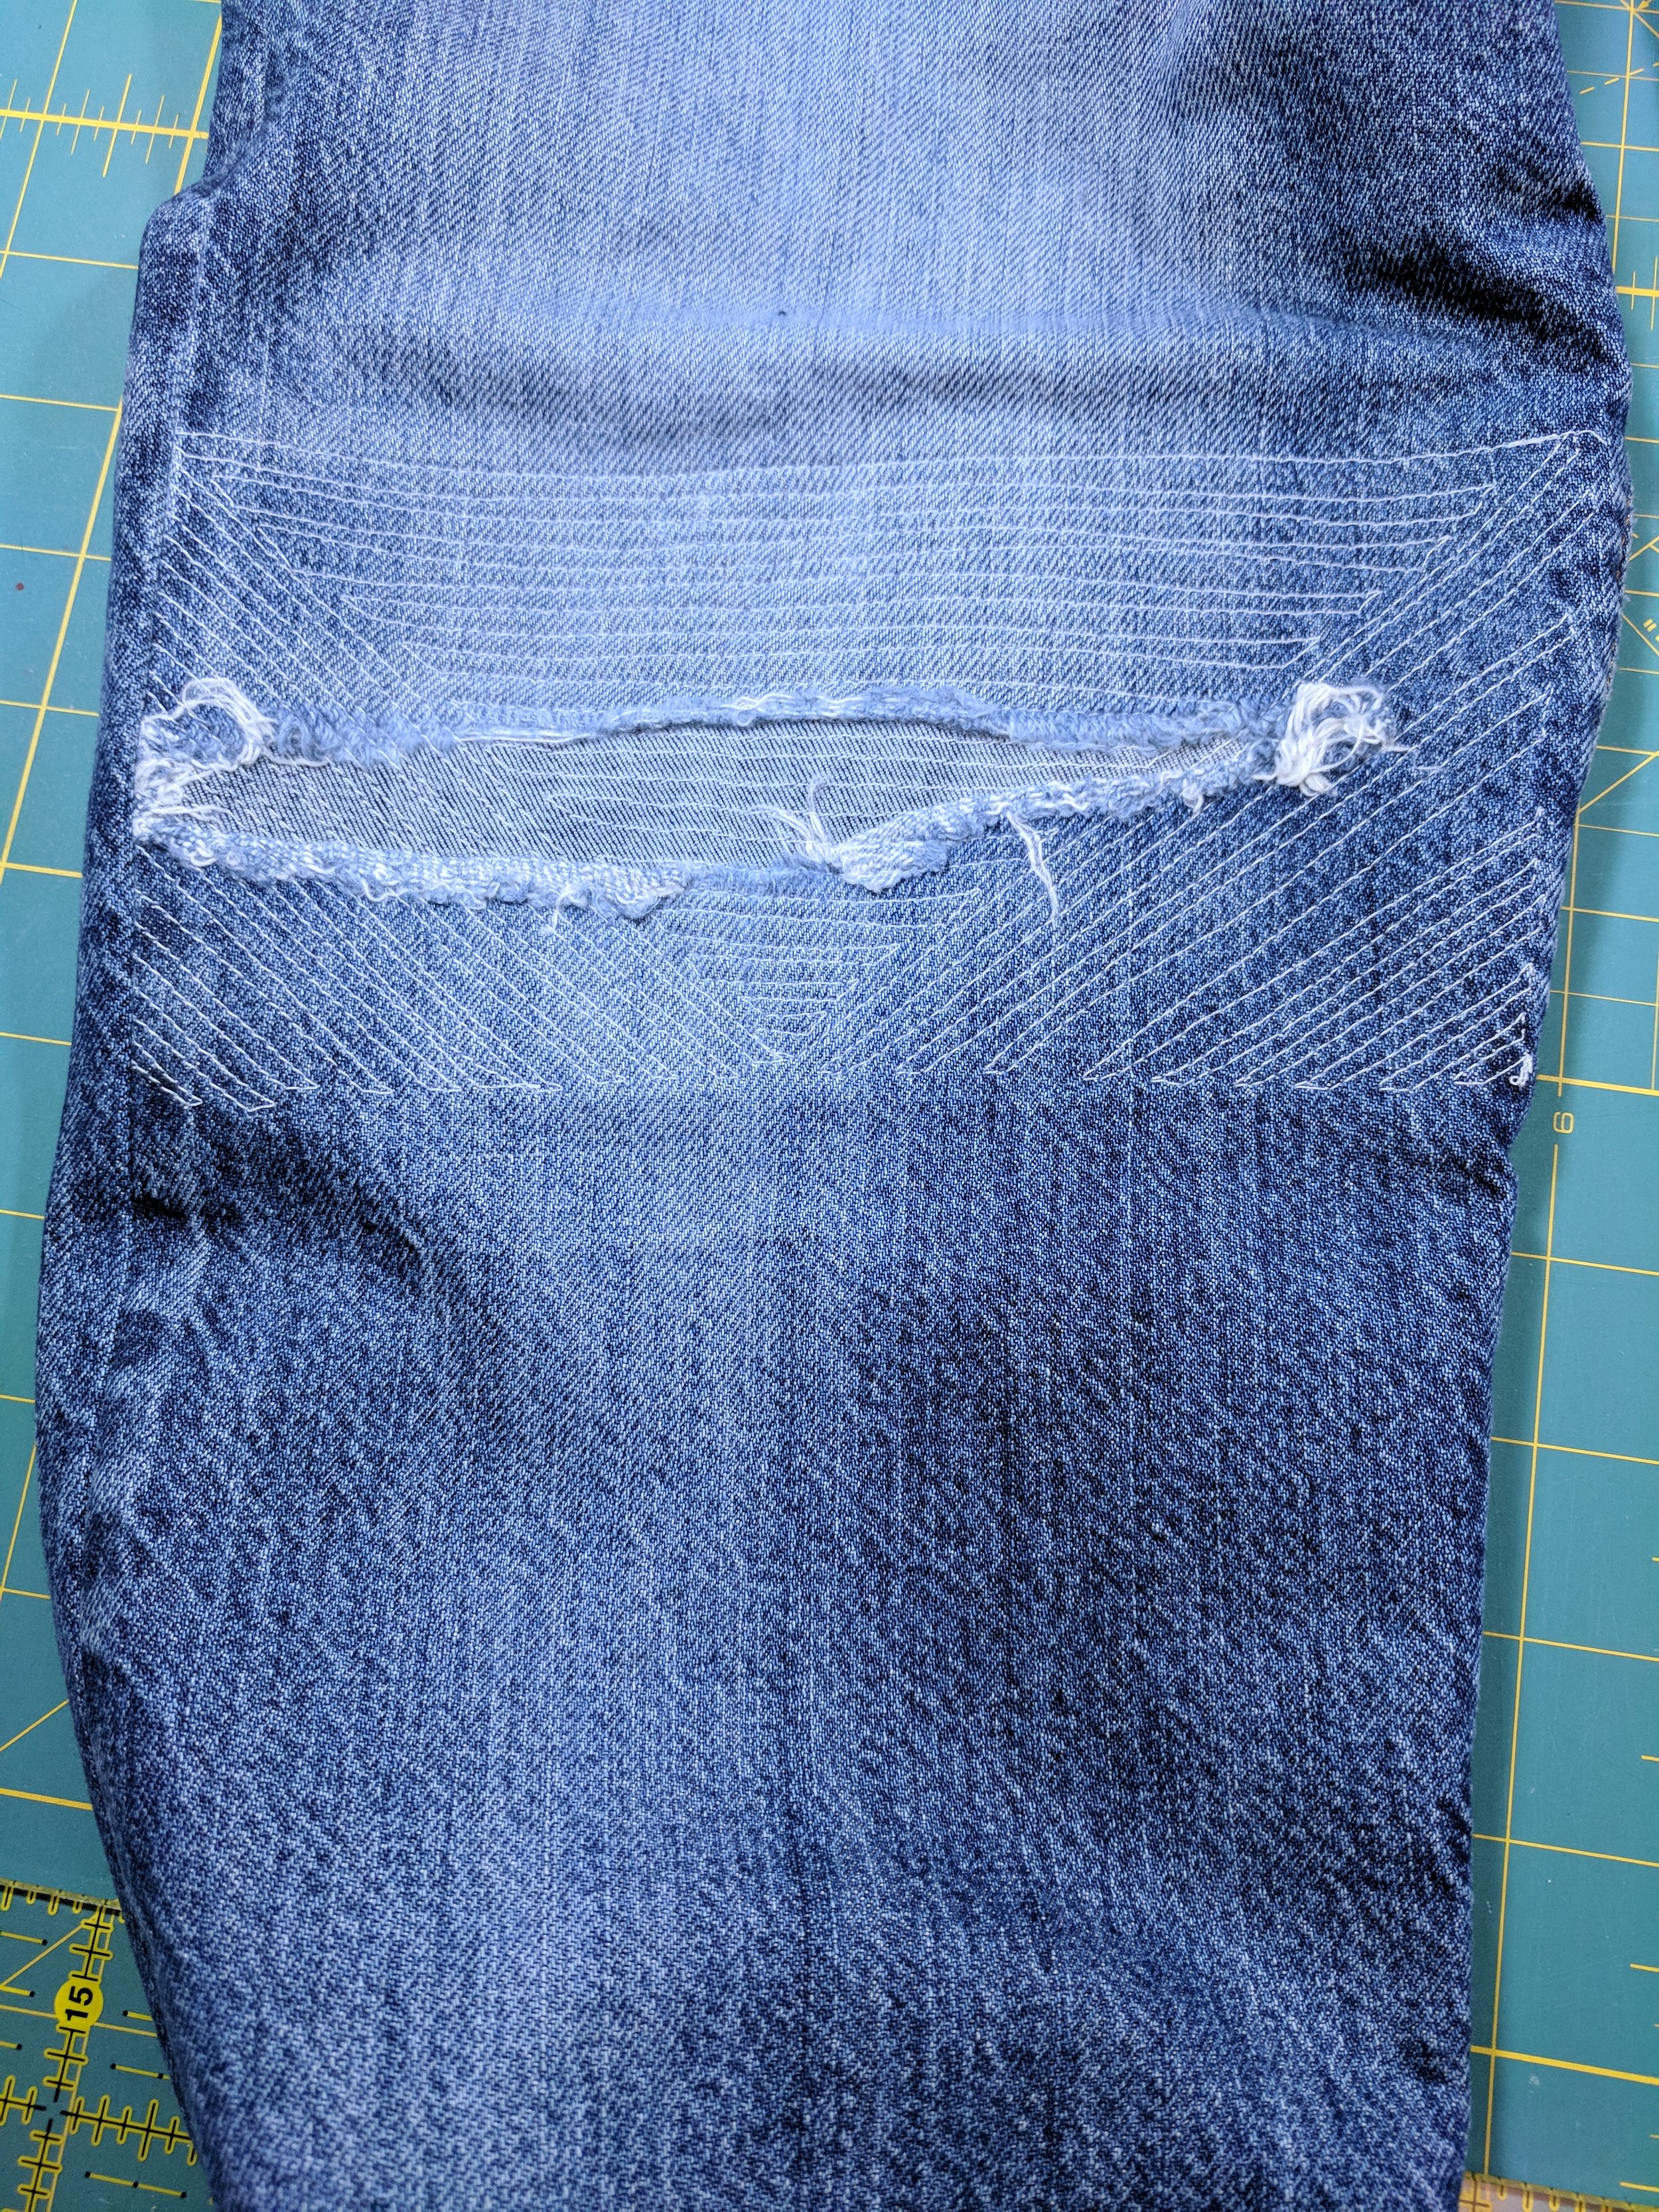 How to Repair Holes in the Knees of Pants